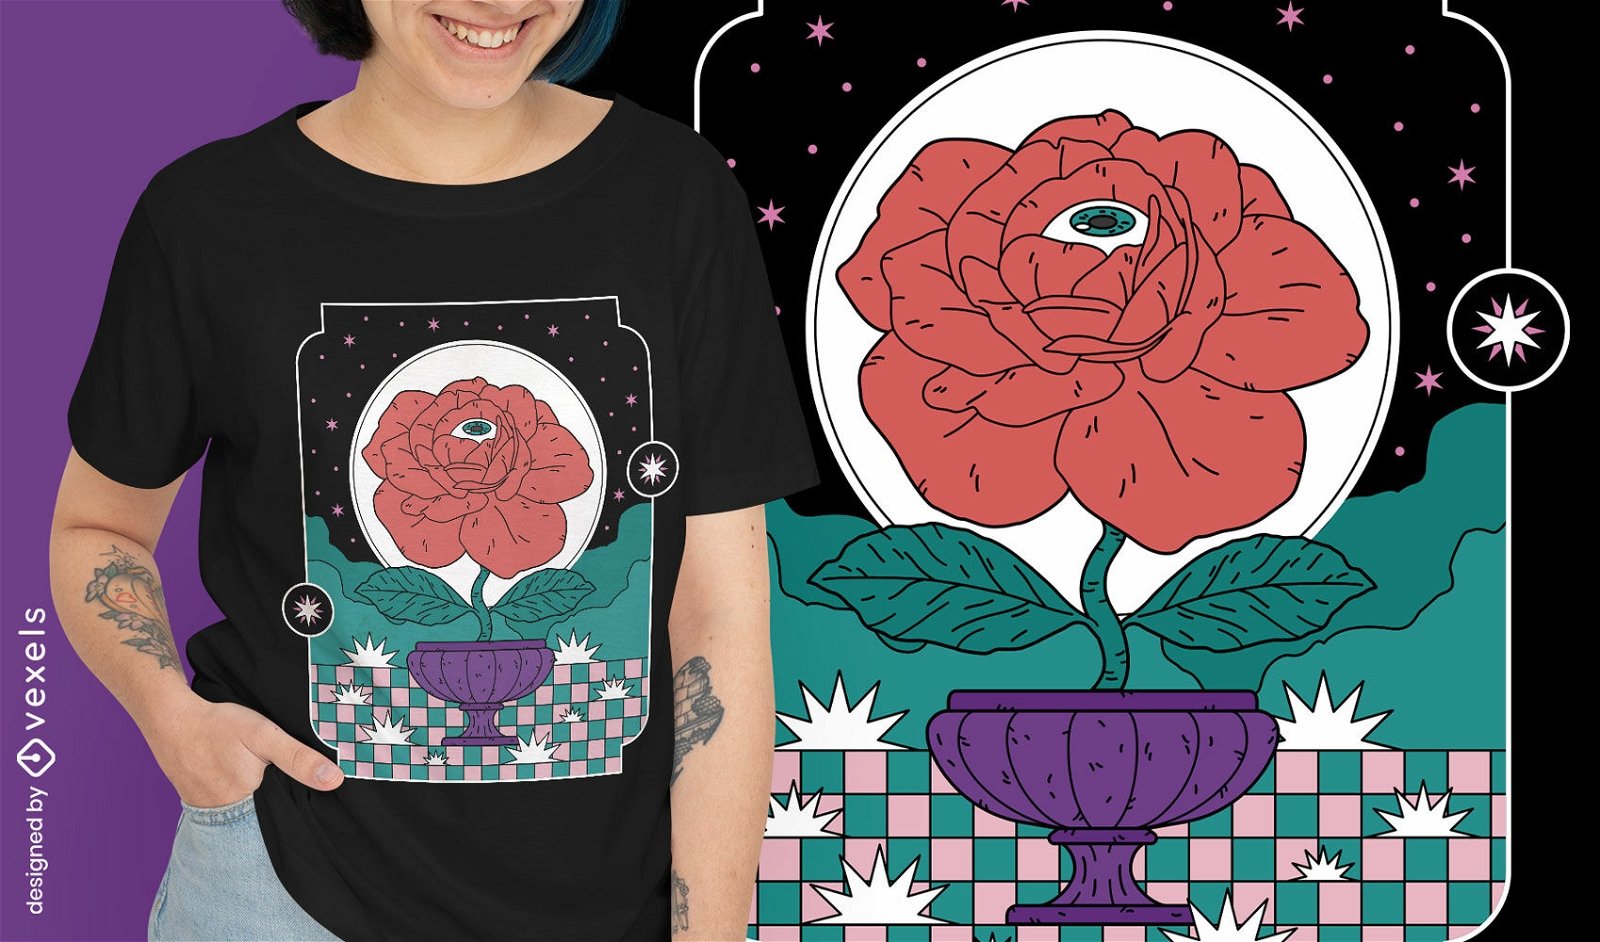 Rose with an eye t-shirt design